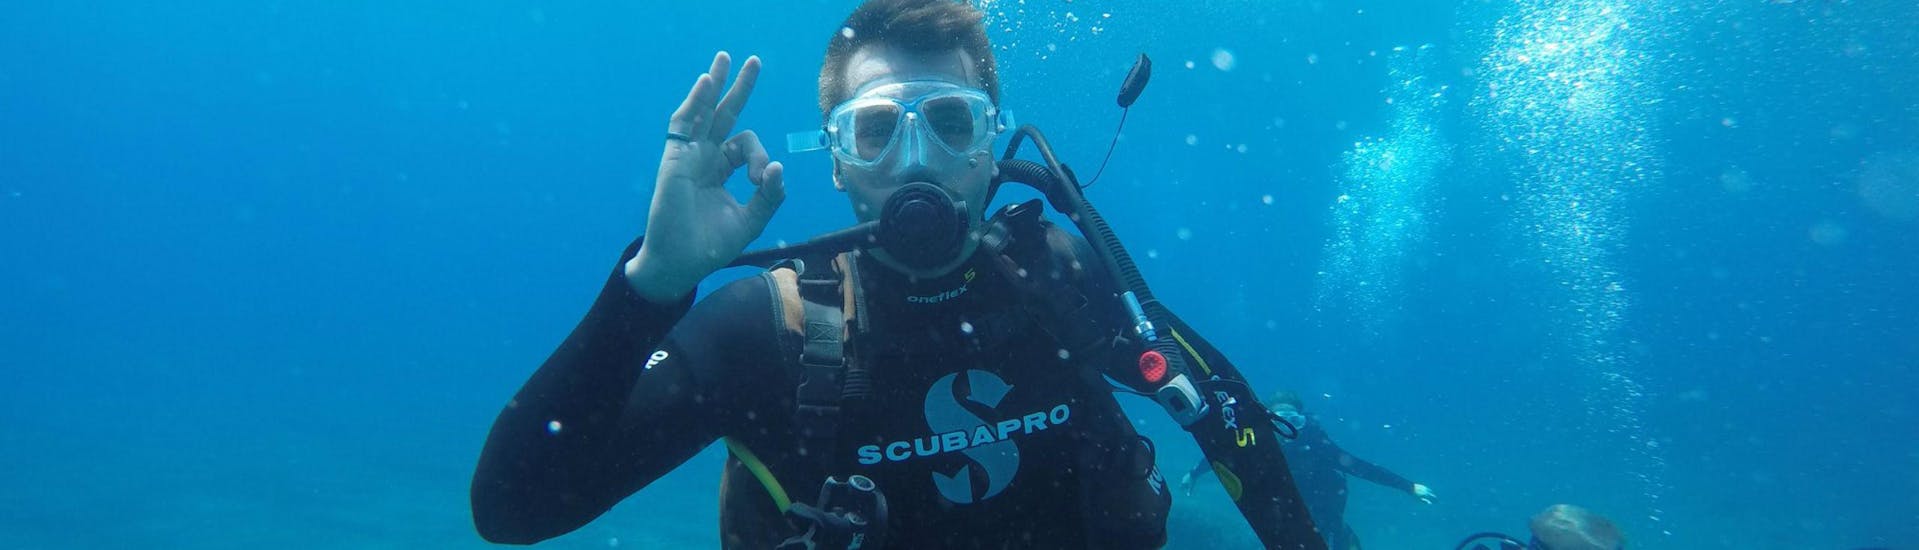 Scuba Diving Course for Beginners - PADI Scuba Diver.